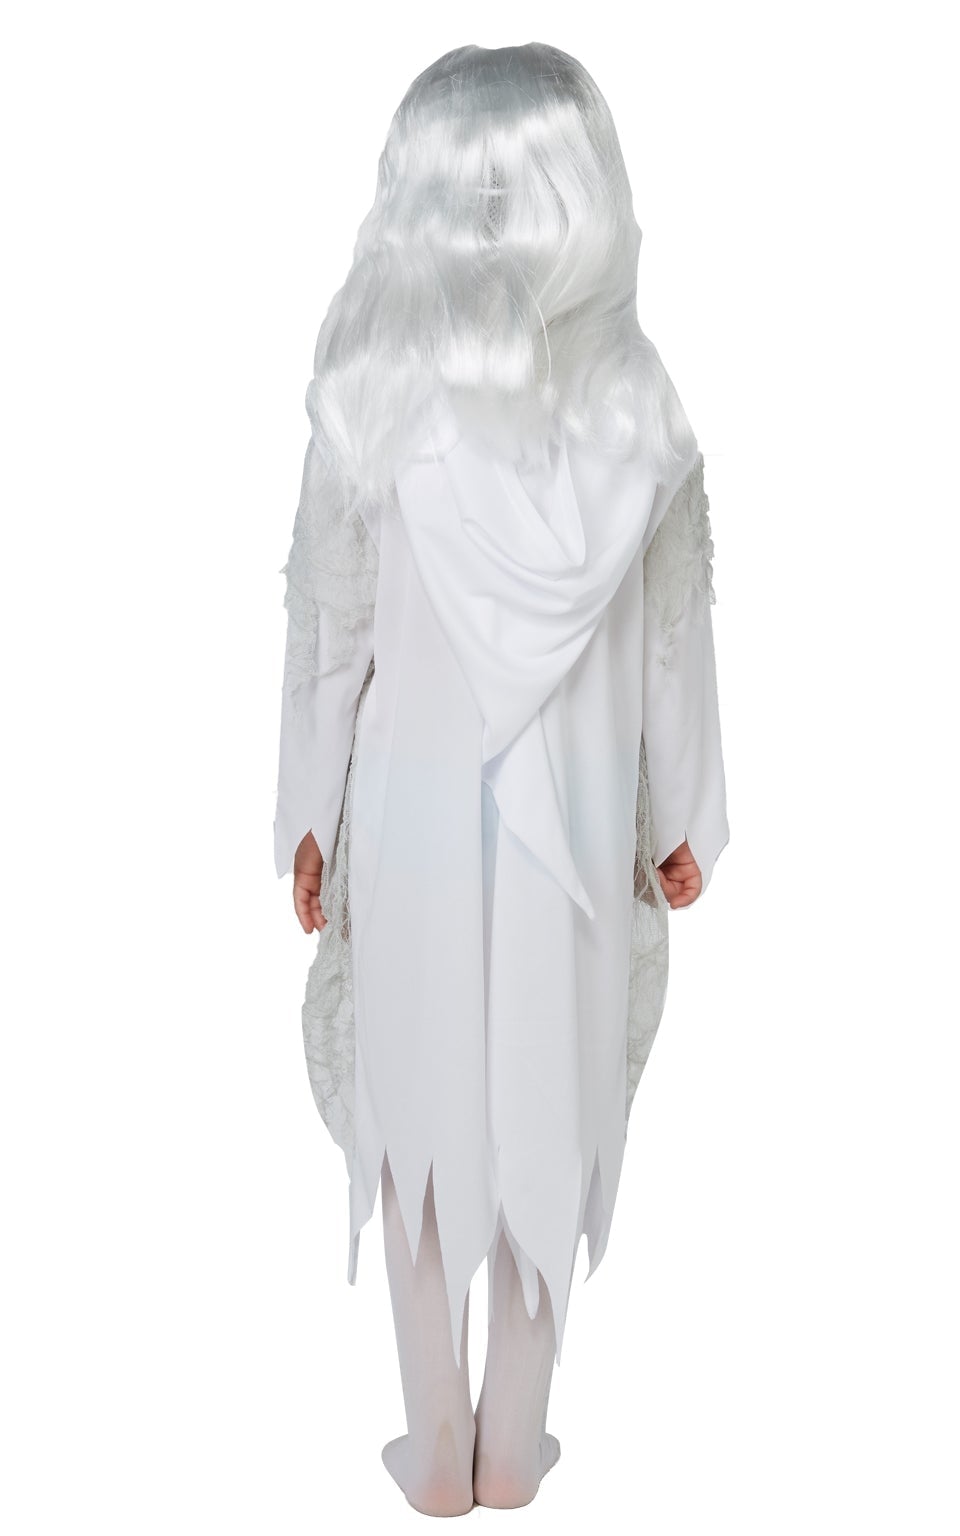 Girls Haunted Ghostly Spirit Costume_2